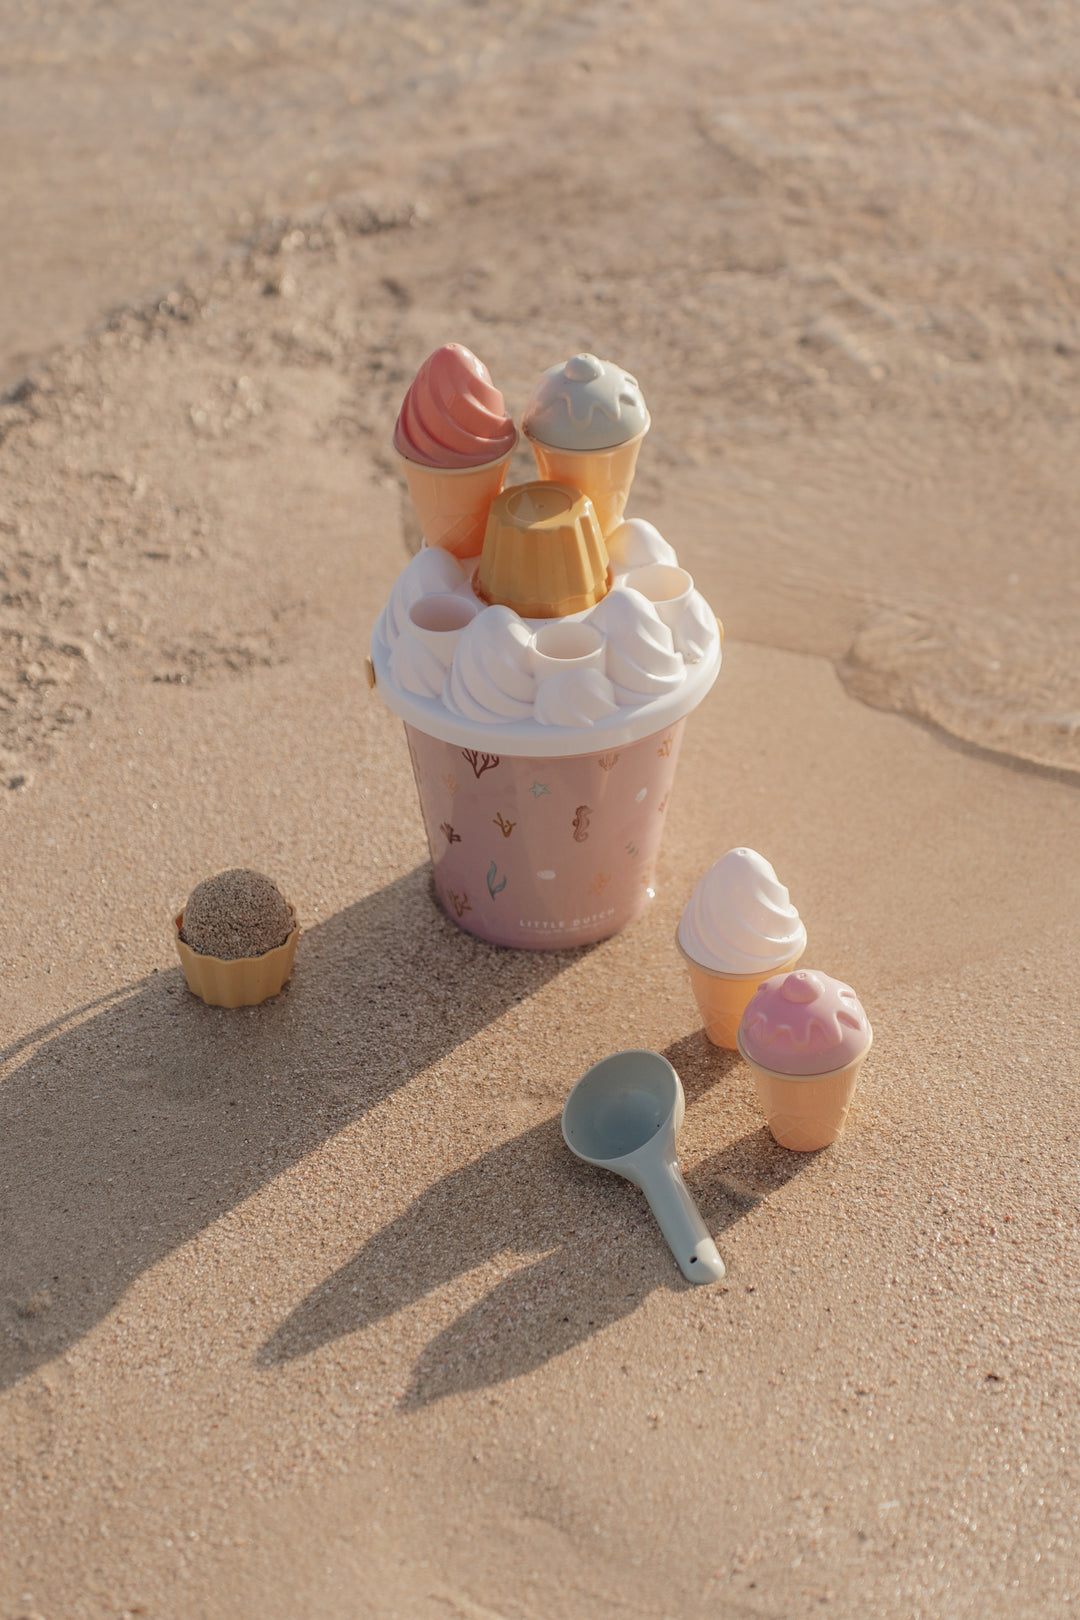 Little Dutch - Ice Cream Bucket Set - Ocean Dreams Pink